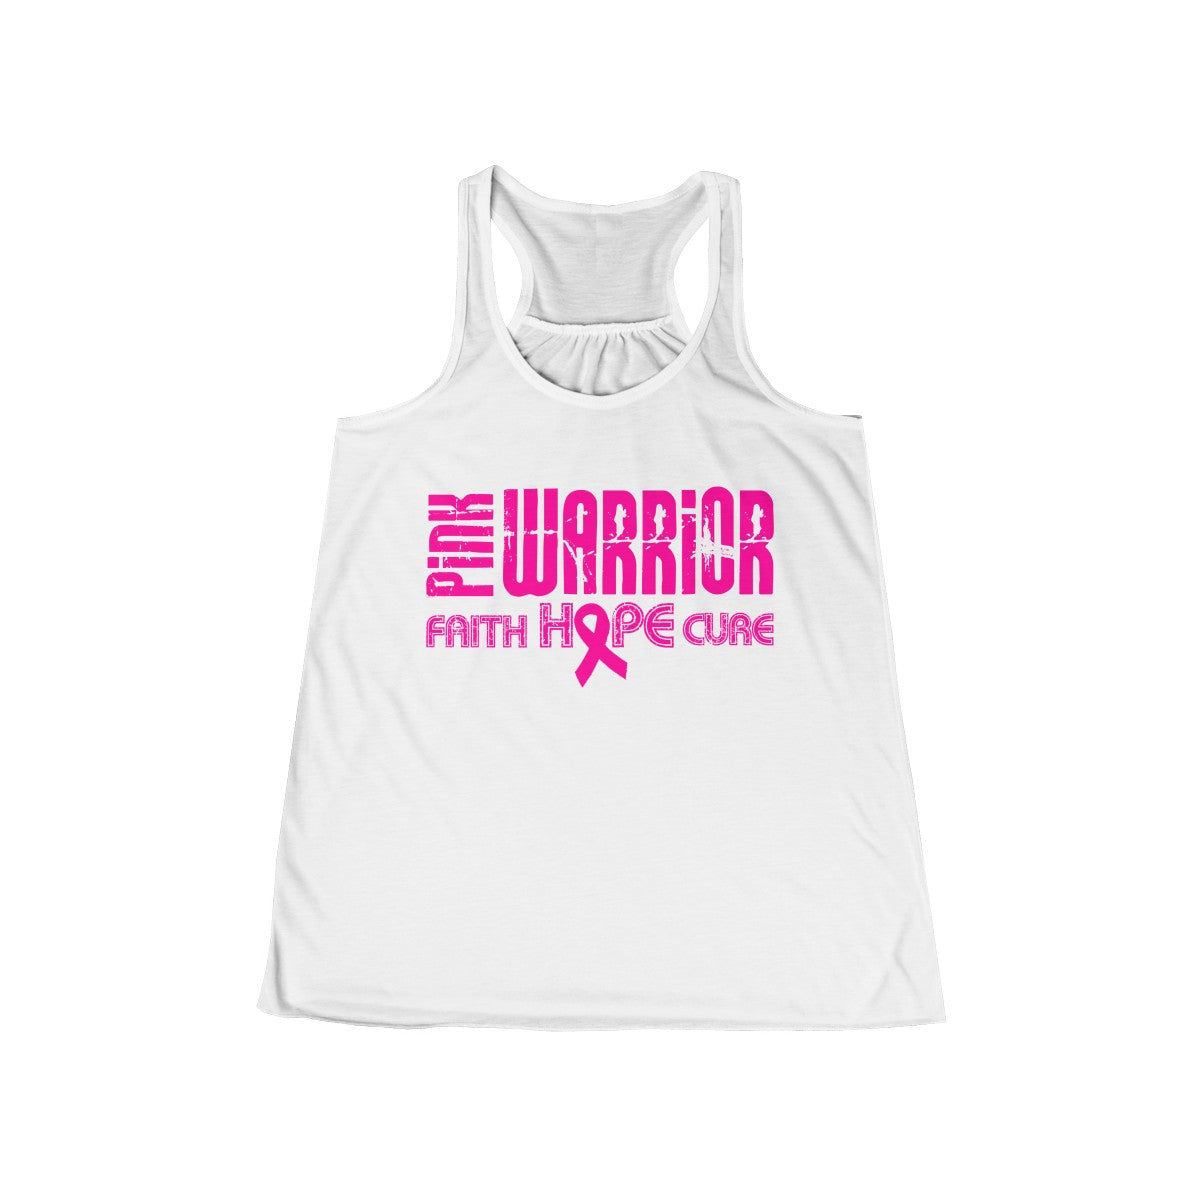 Pink Warrior Breast Cancer Flowy Racerback Tank